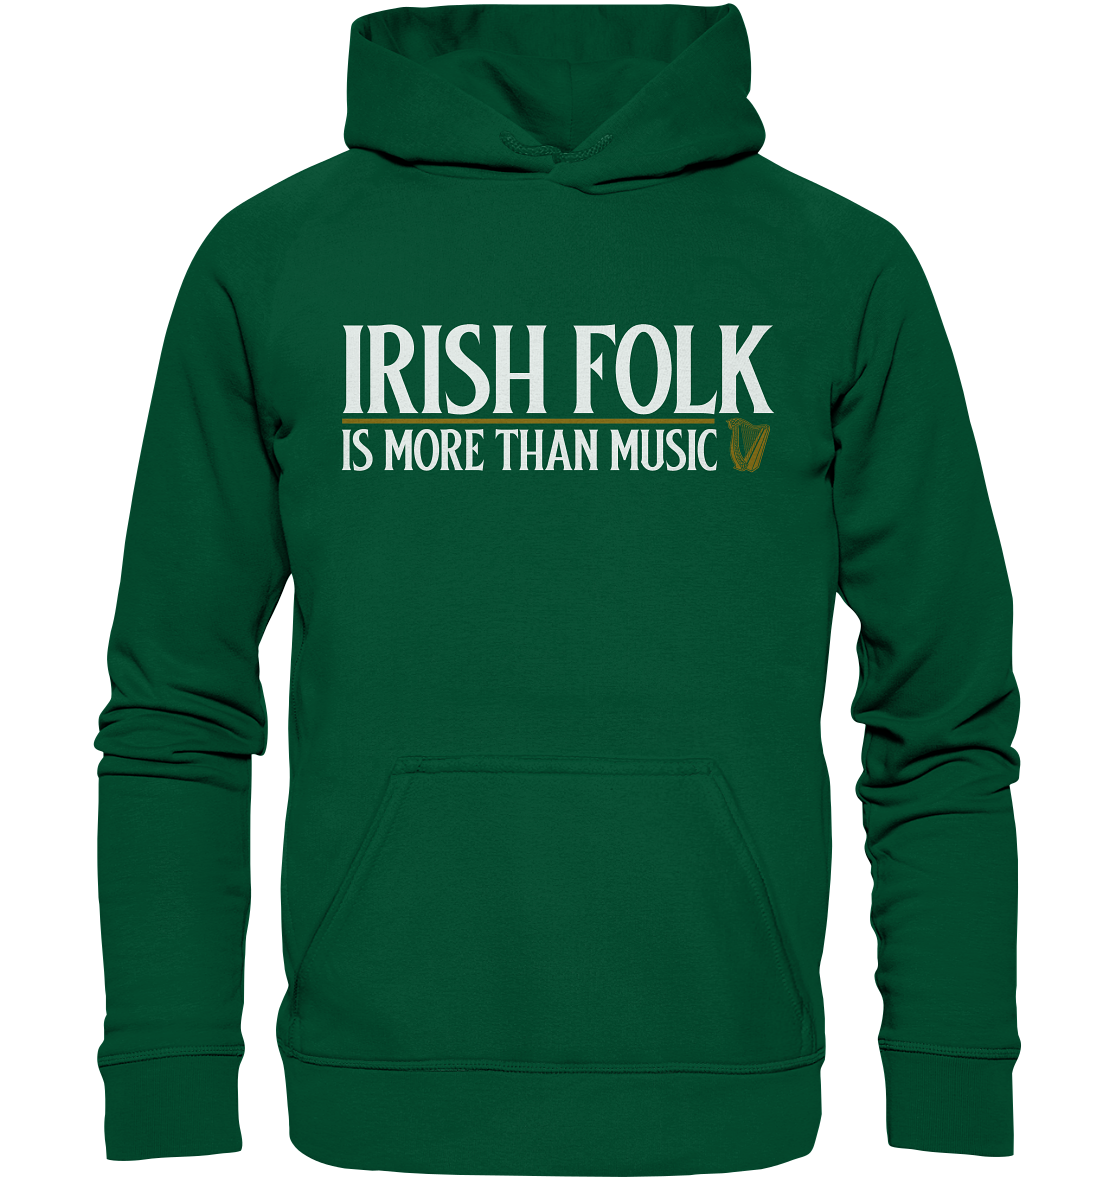 Irish Folk "Is More Than Music" - Basic Unisex Hoodie